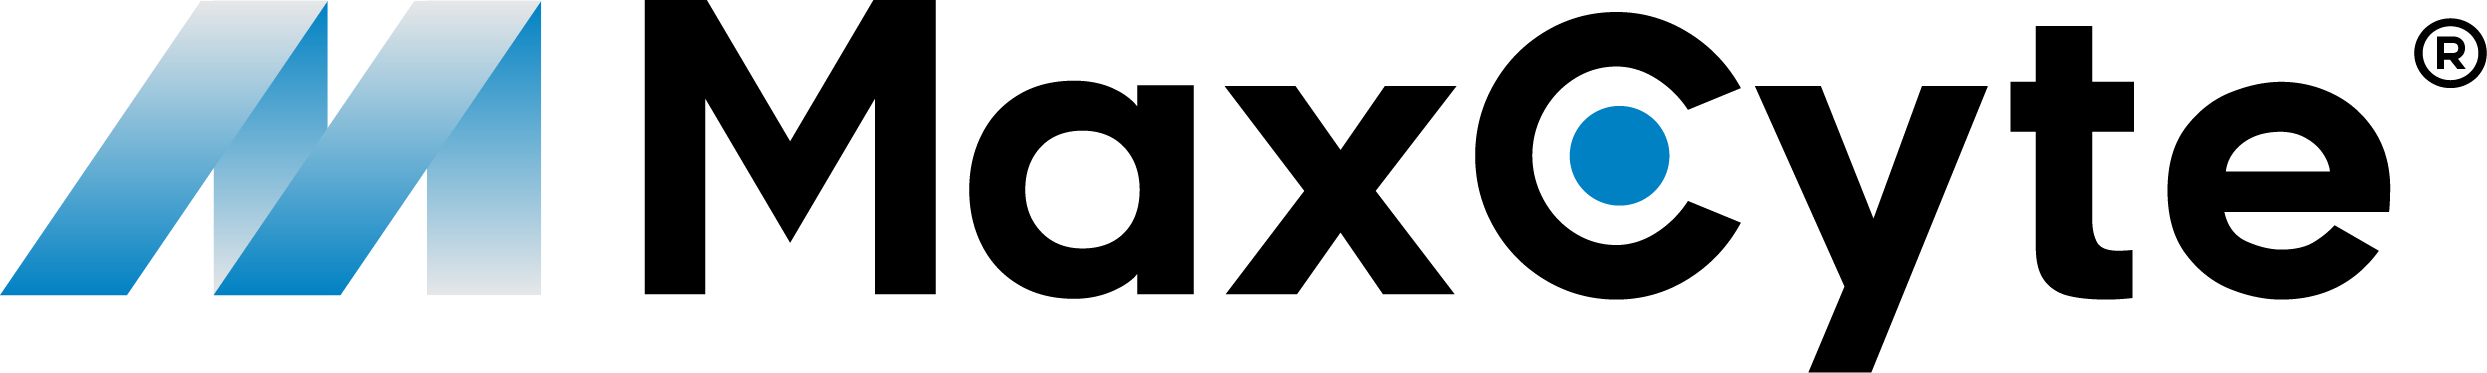 MaxCyte-Logo-600x600.png